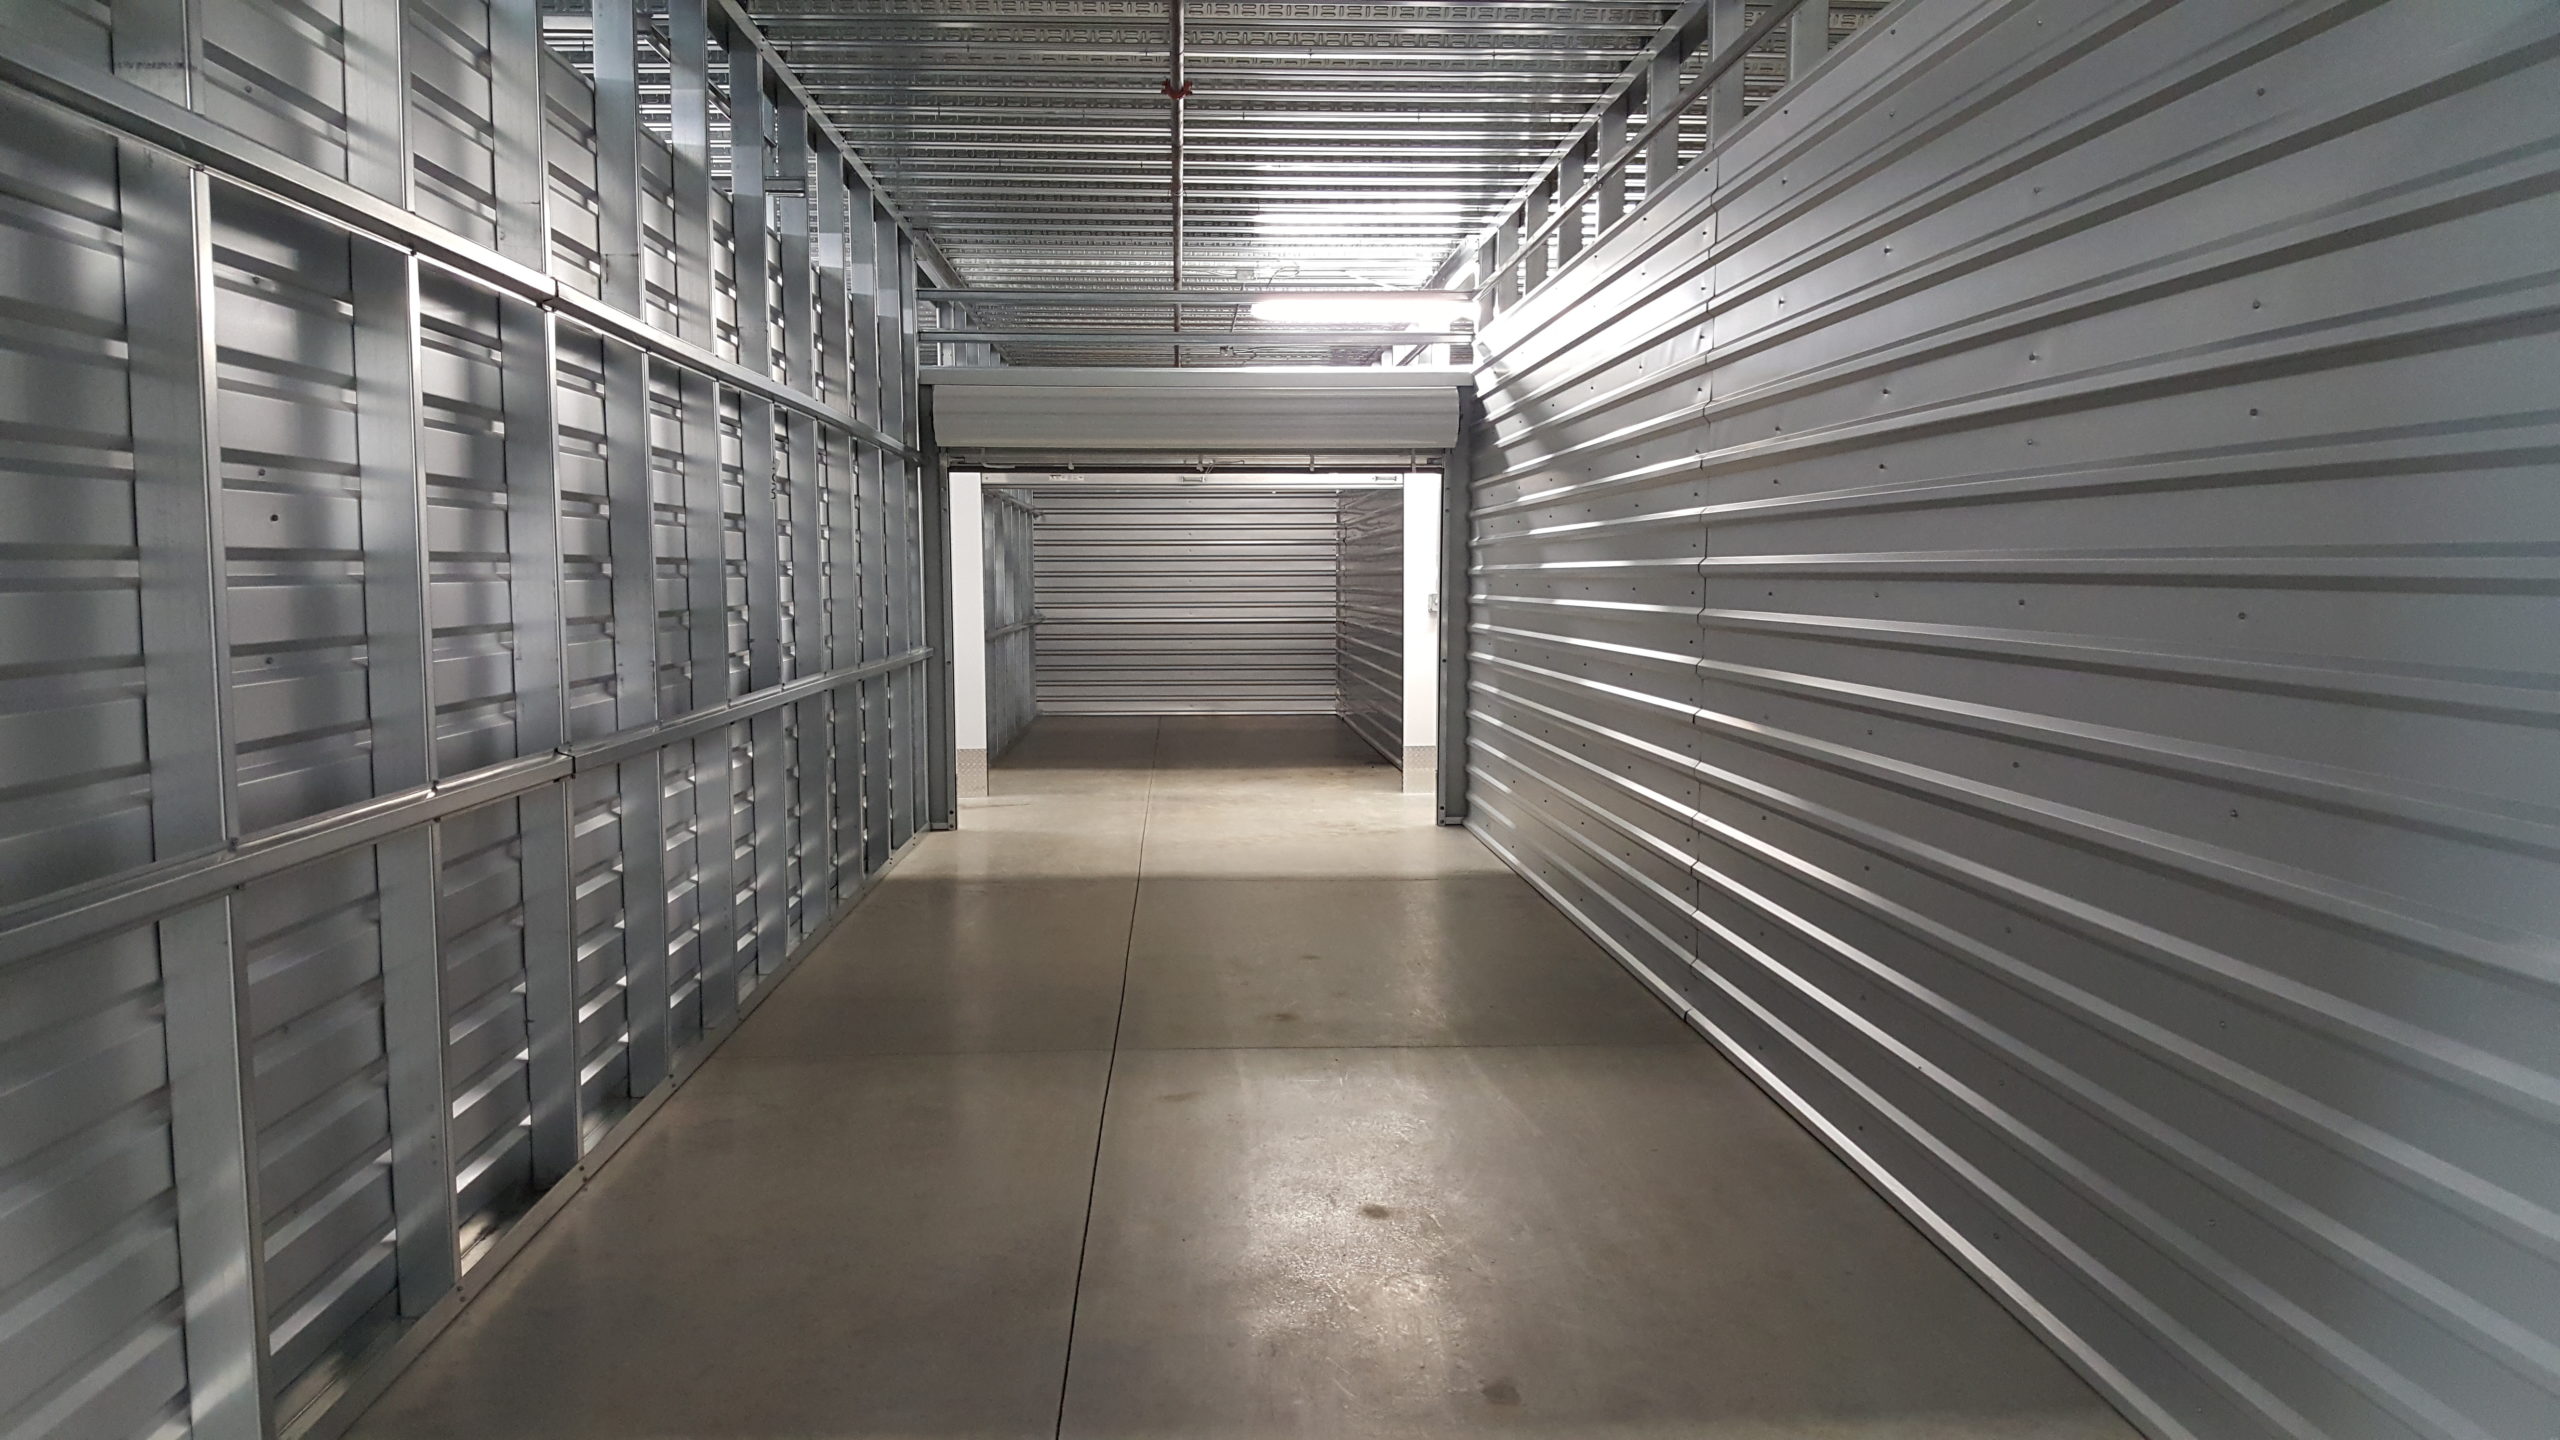 Large storage unit at Linder Self Storage serving the Vinings and Smyrna areas of Atlanta